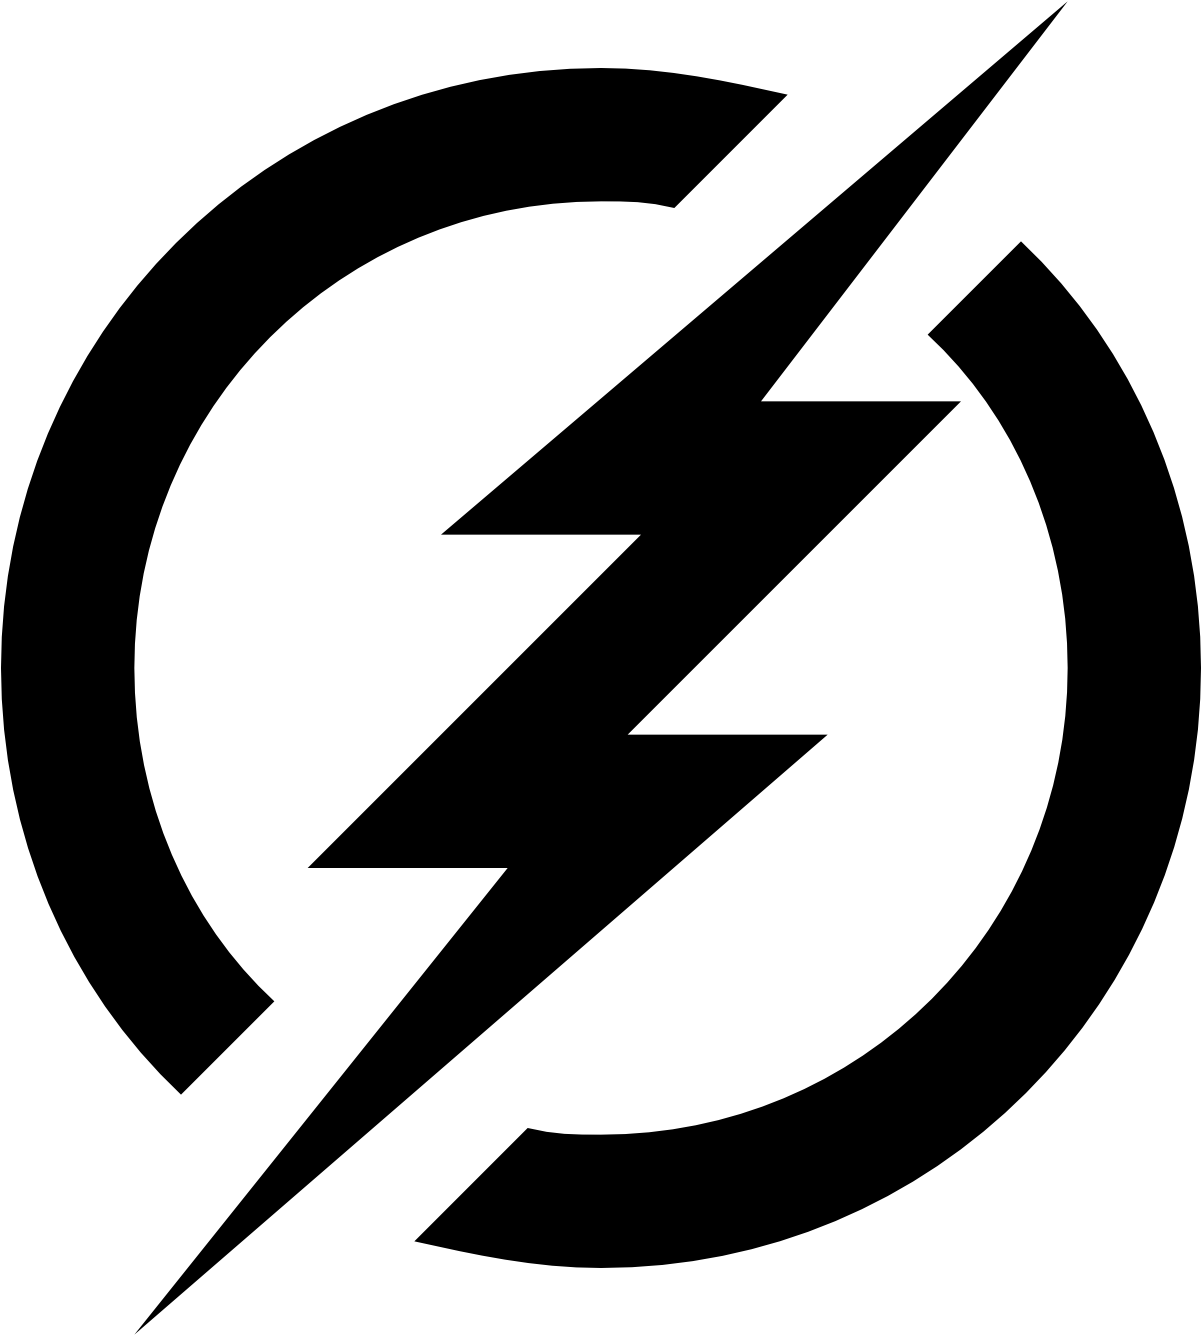 The Flash Sign Icon - Flash Icon (1600x1600)